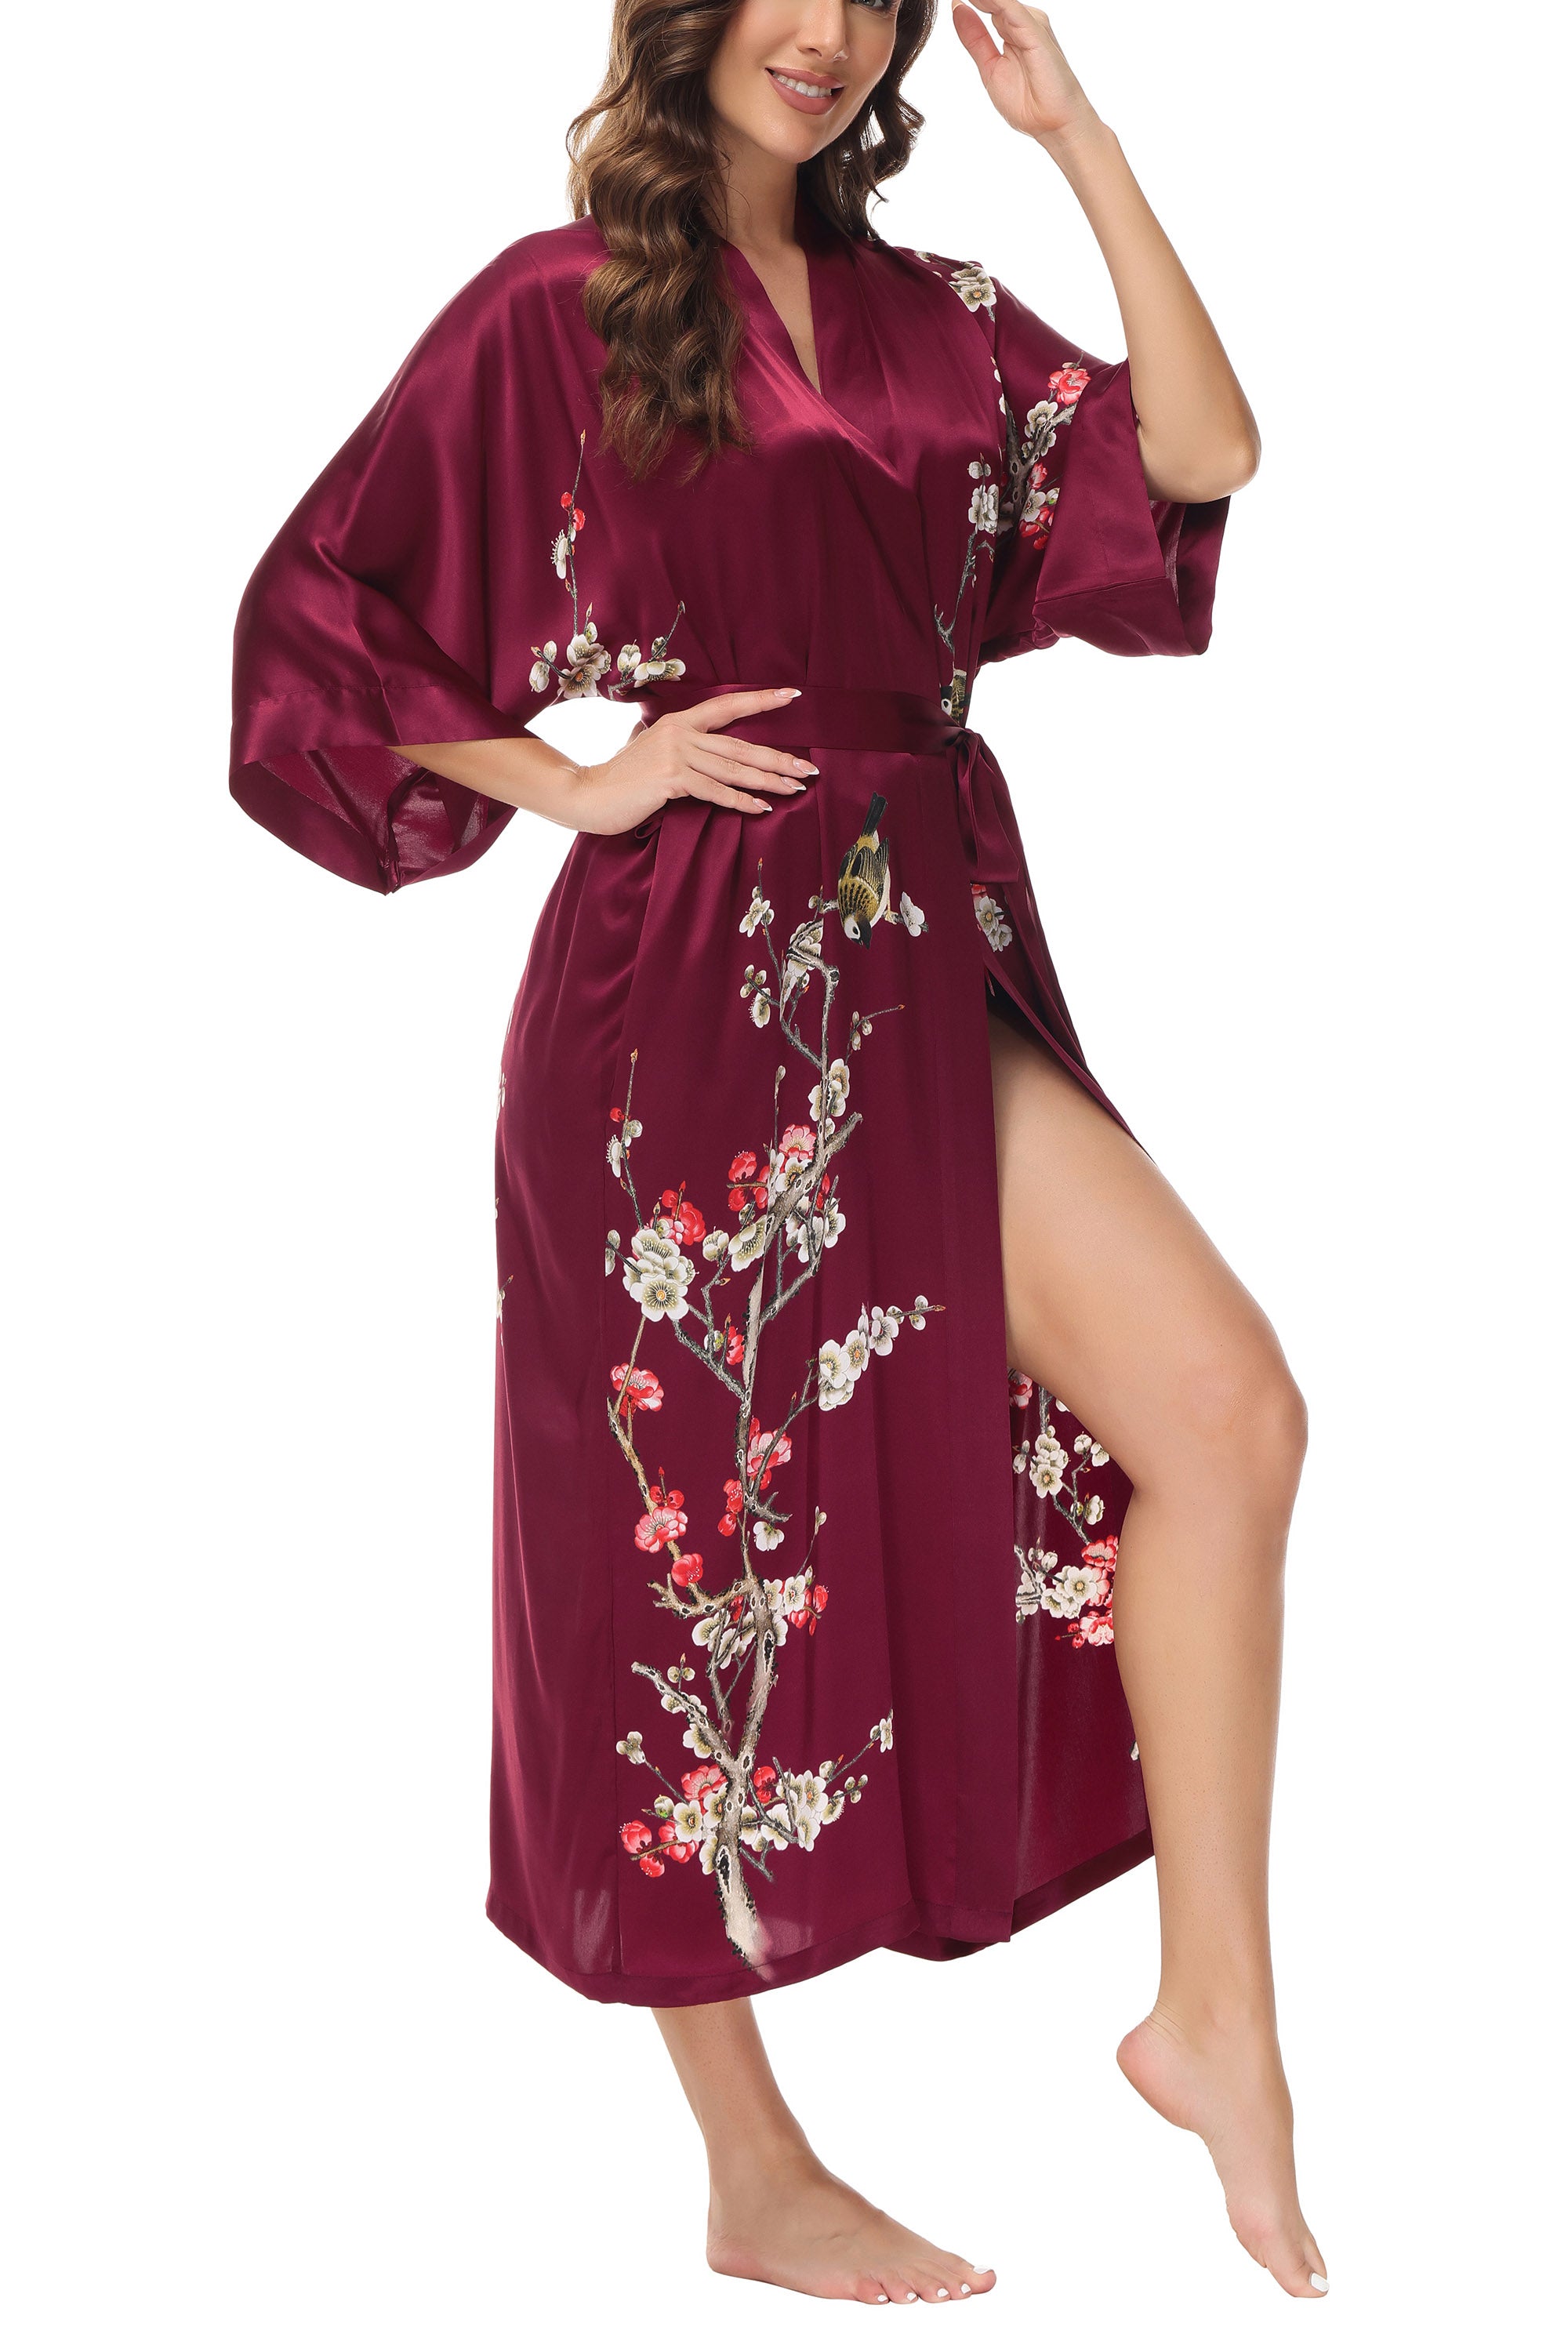 OSCAR ROSSA Women's Digitally Printed Silk Sleepwear 100% Silk Long Robe Kimono